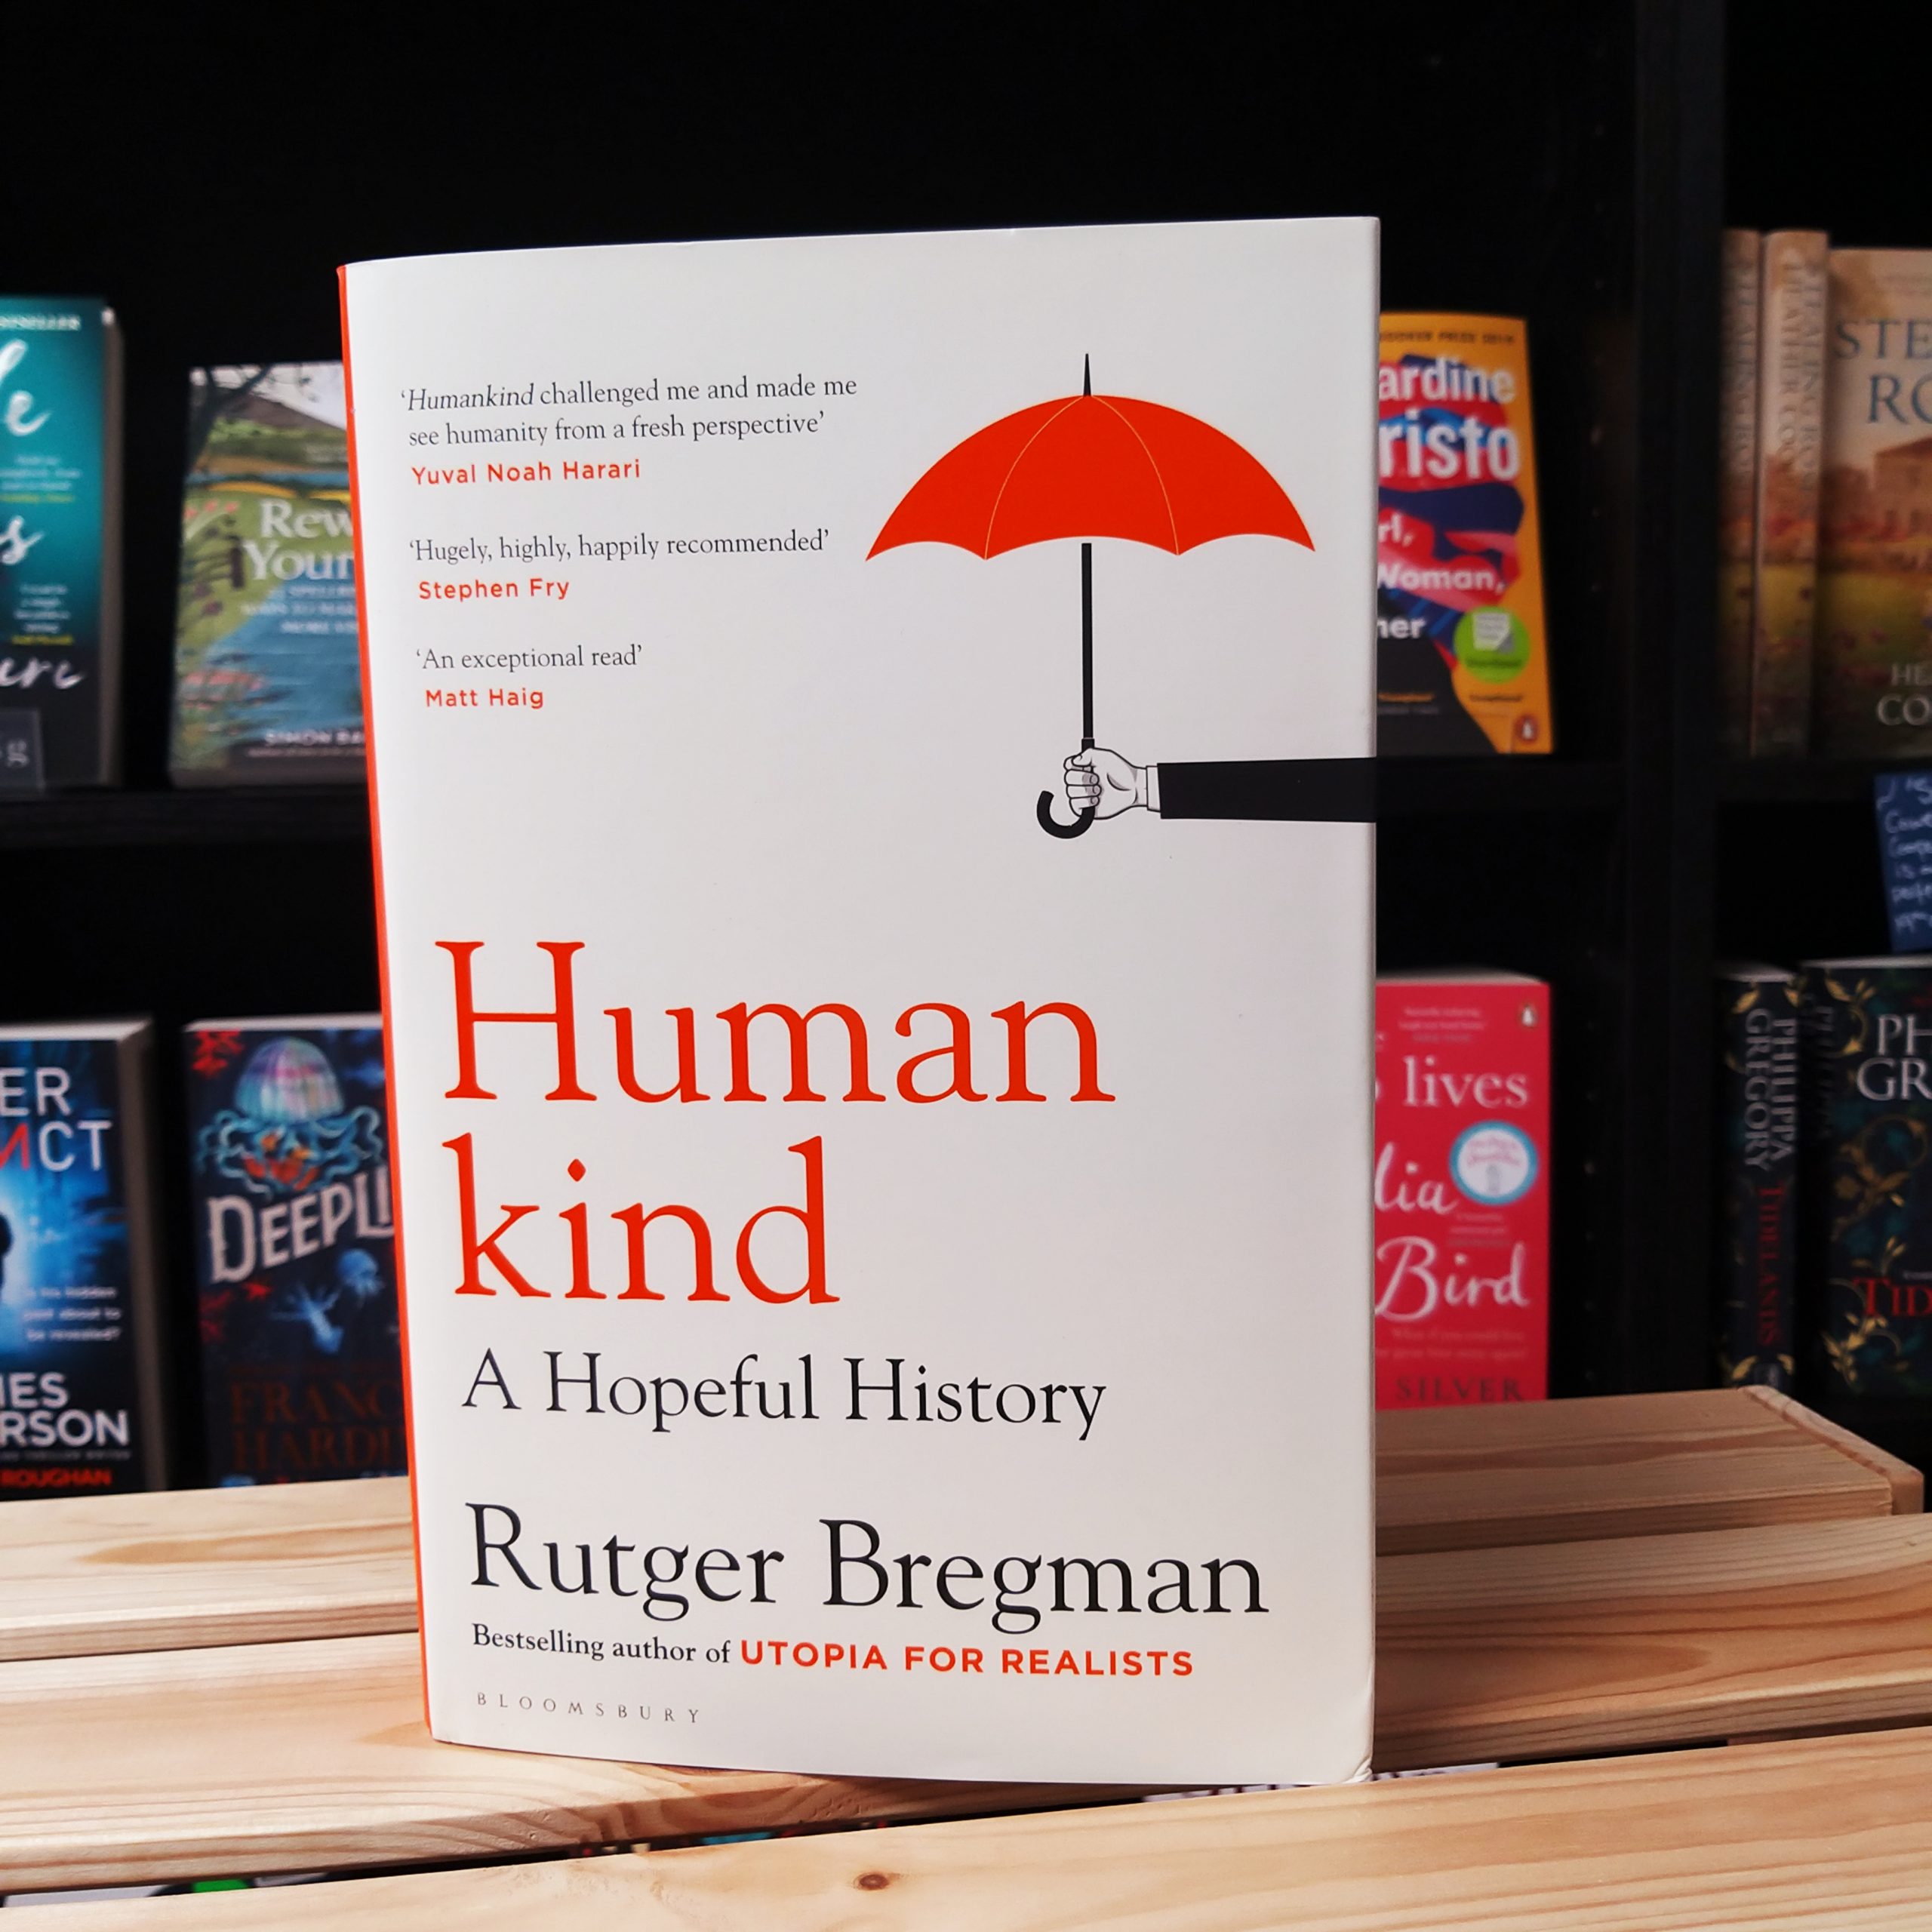 Humankind by Brad Aronson